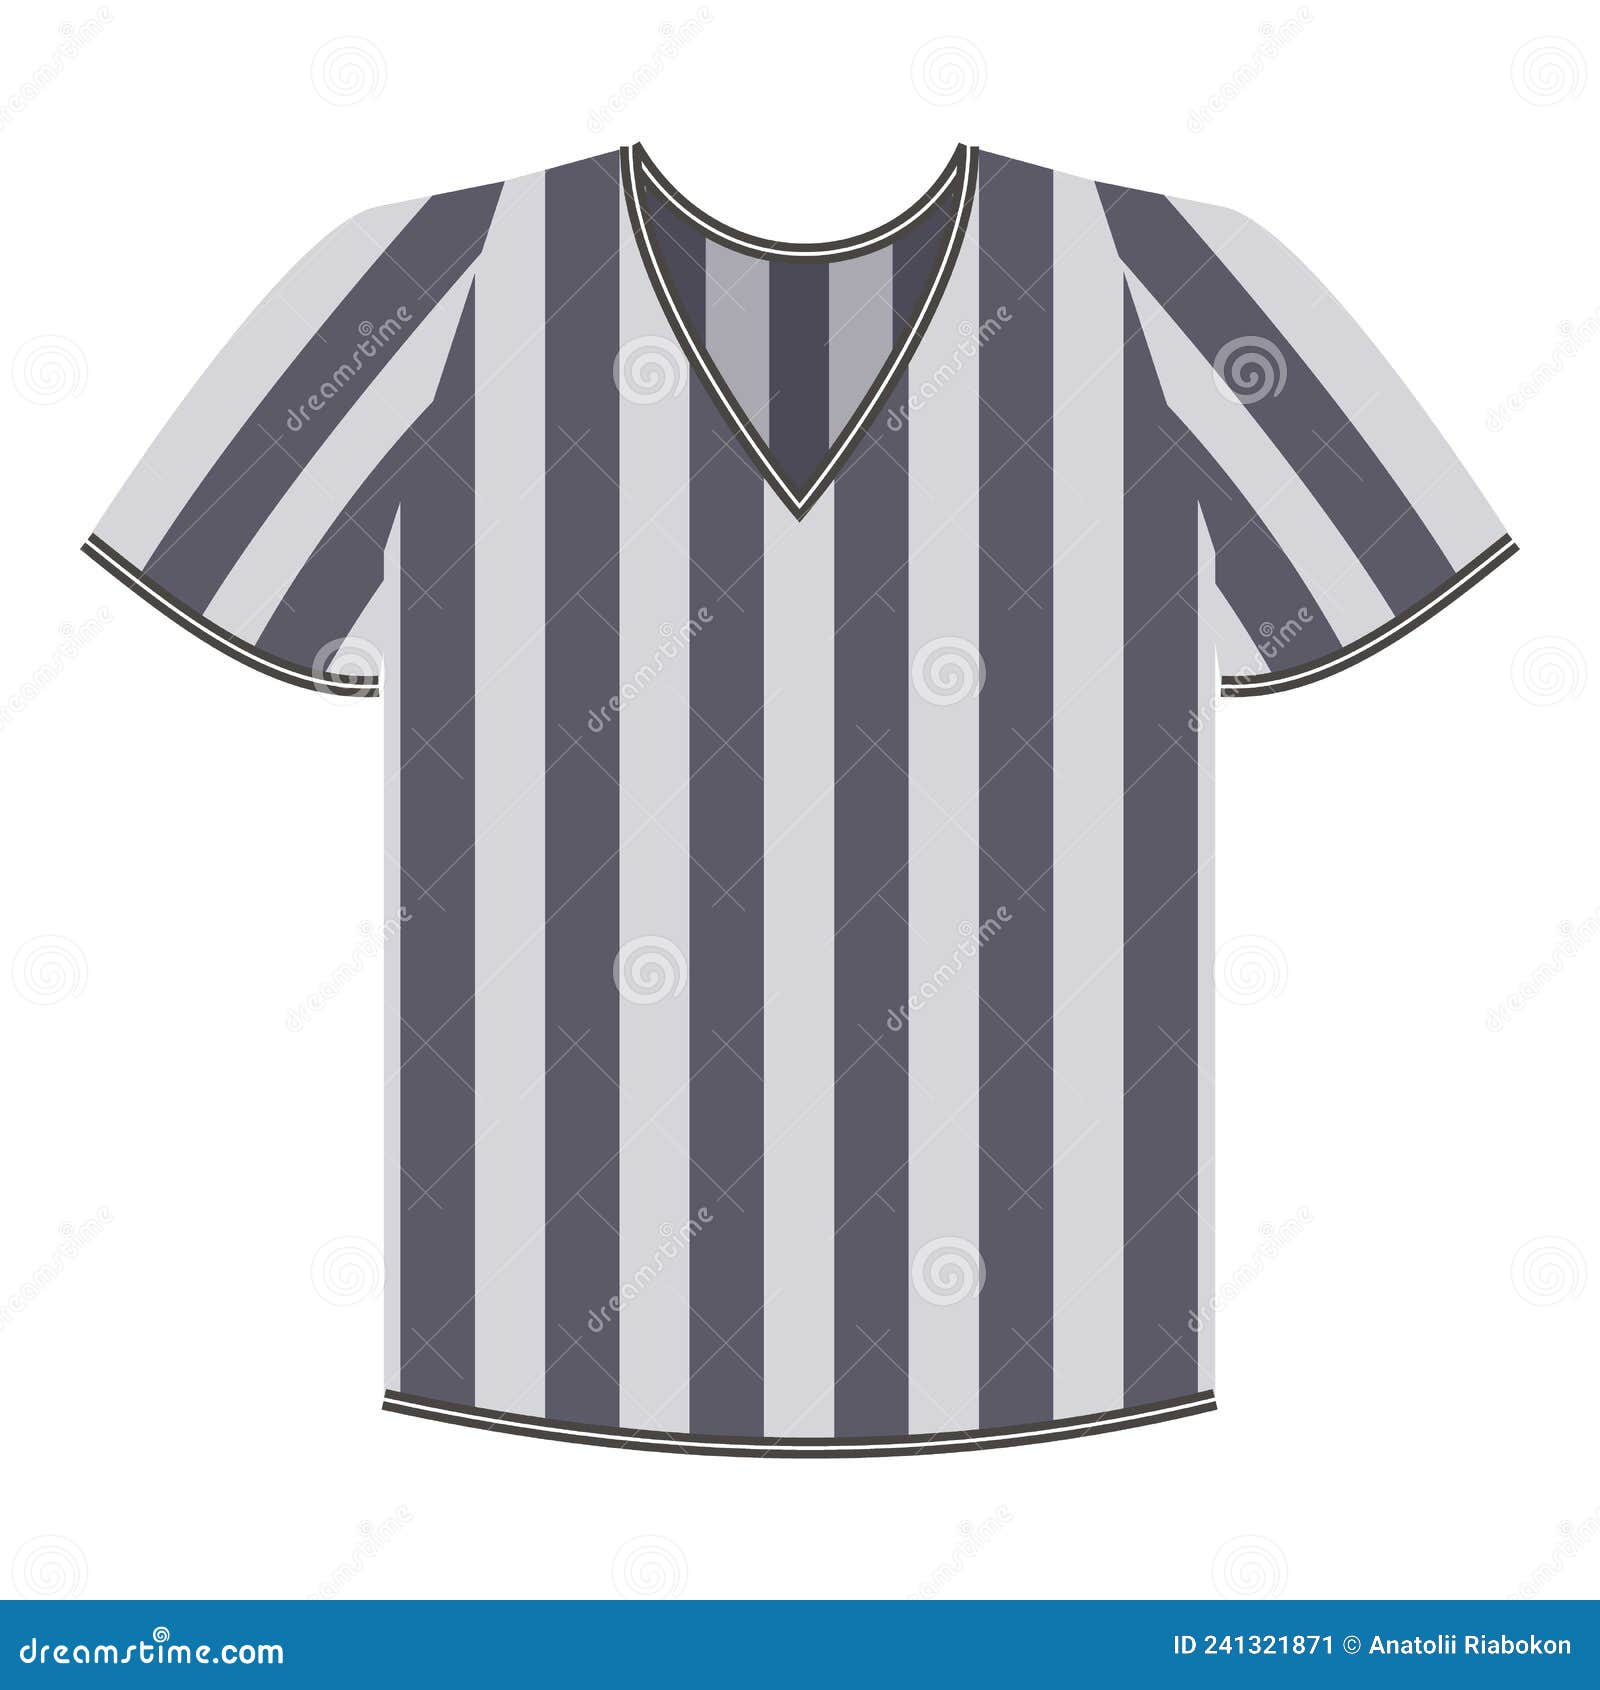 Referee Shirt Icon Cartoon Vector. Basketball Equipment Stock Vector ...